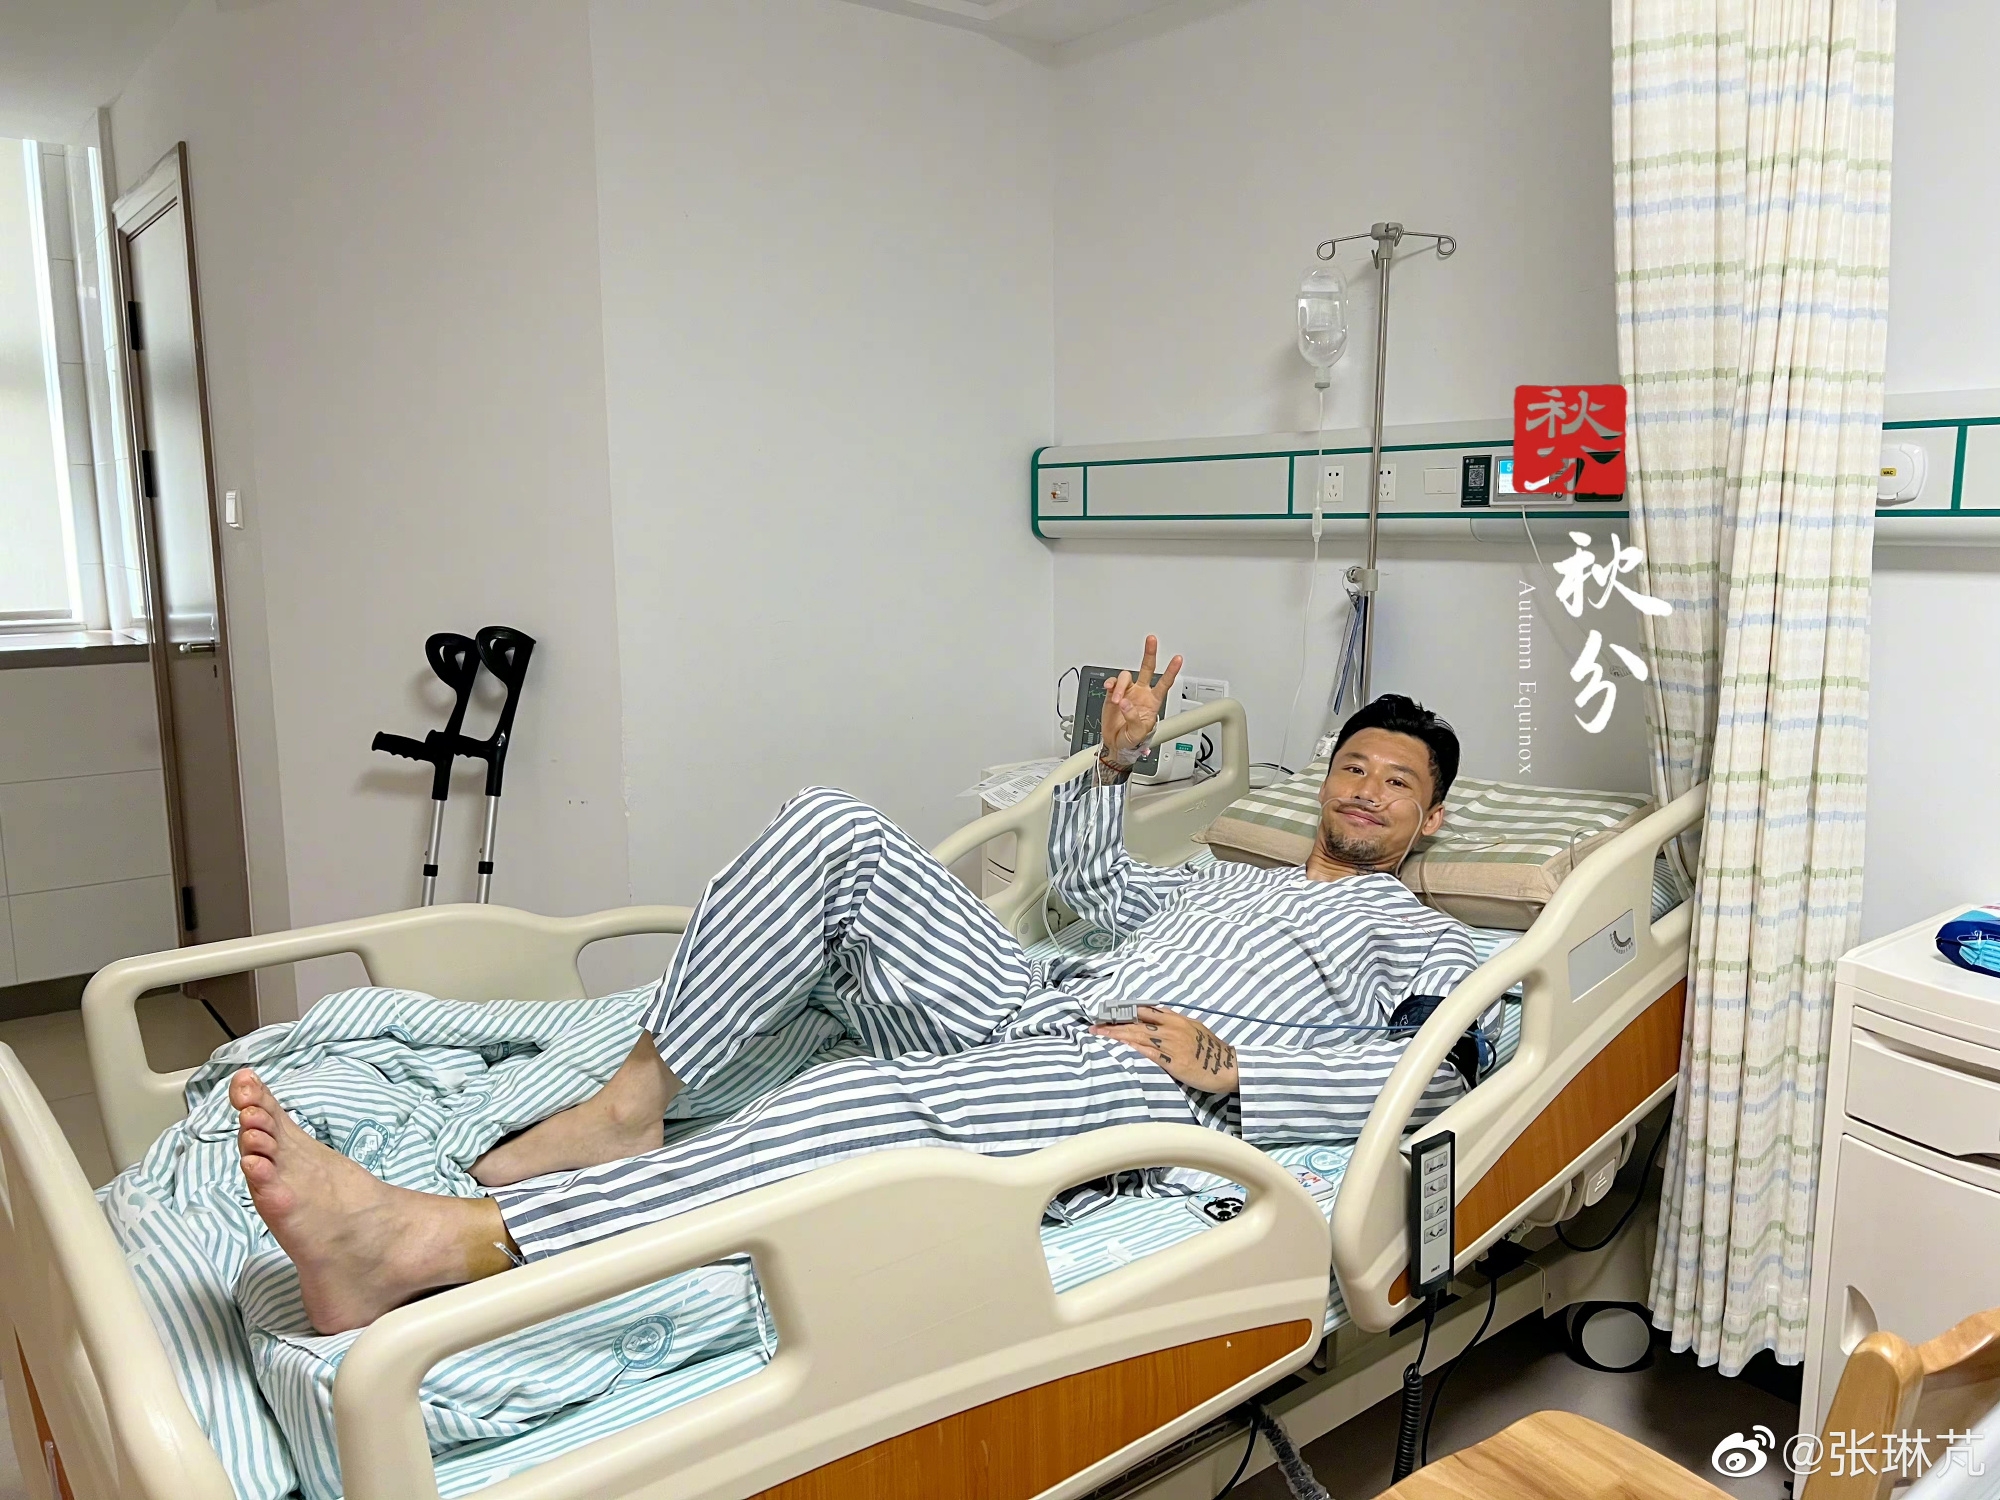 【BTC365币投】张琳芃手术成功报平安：以后不用在训练和比赛前吃止痛药了